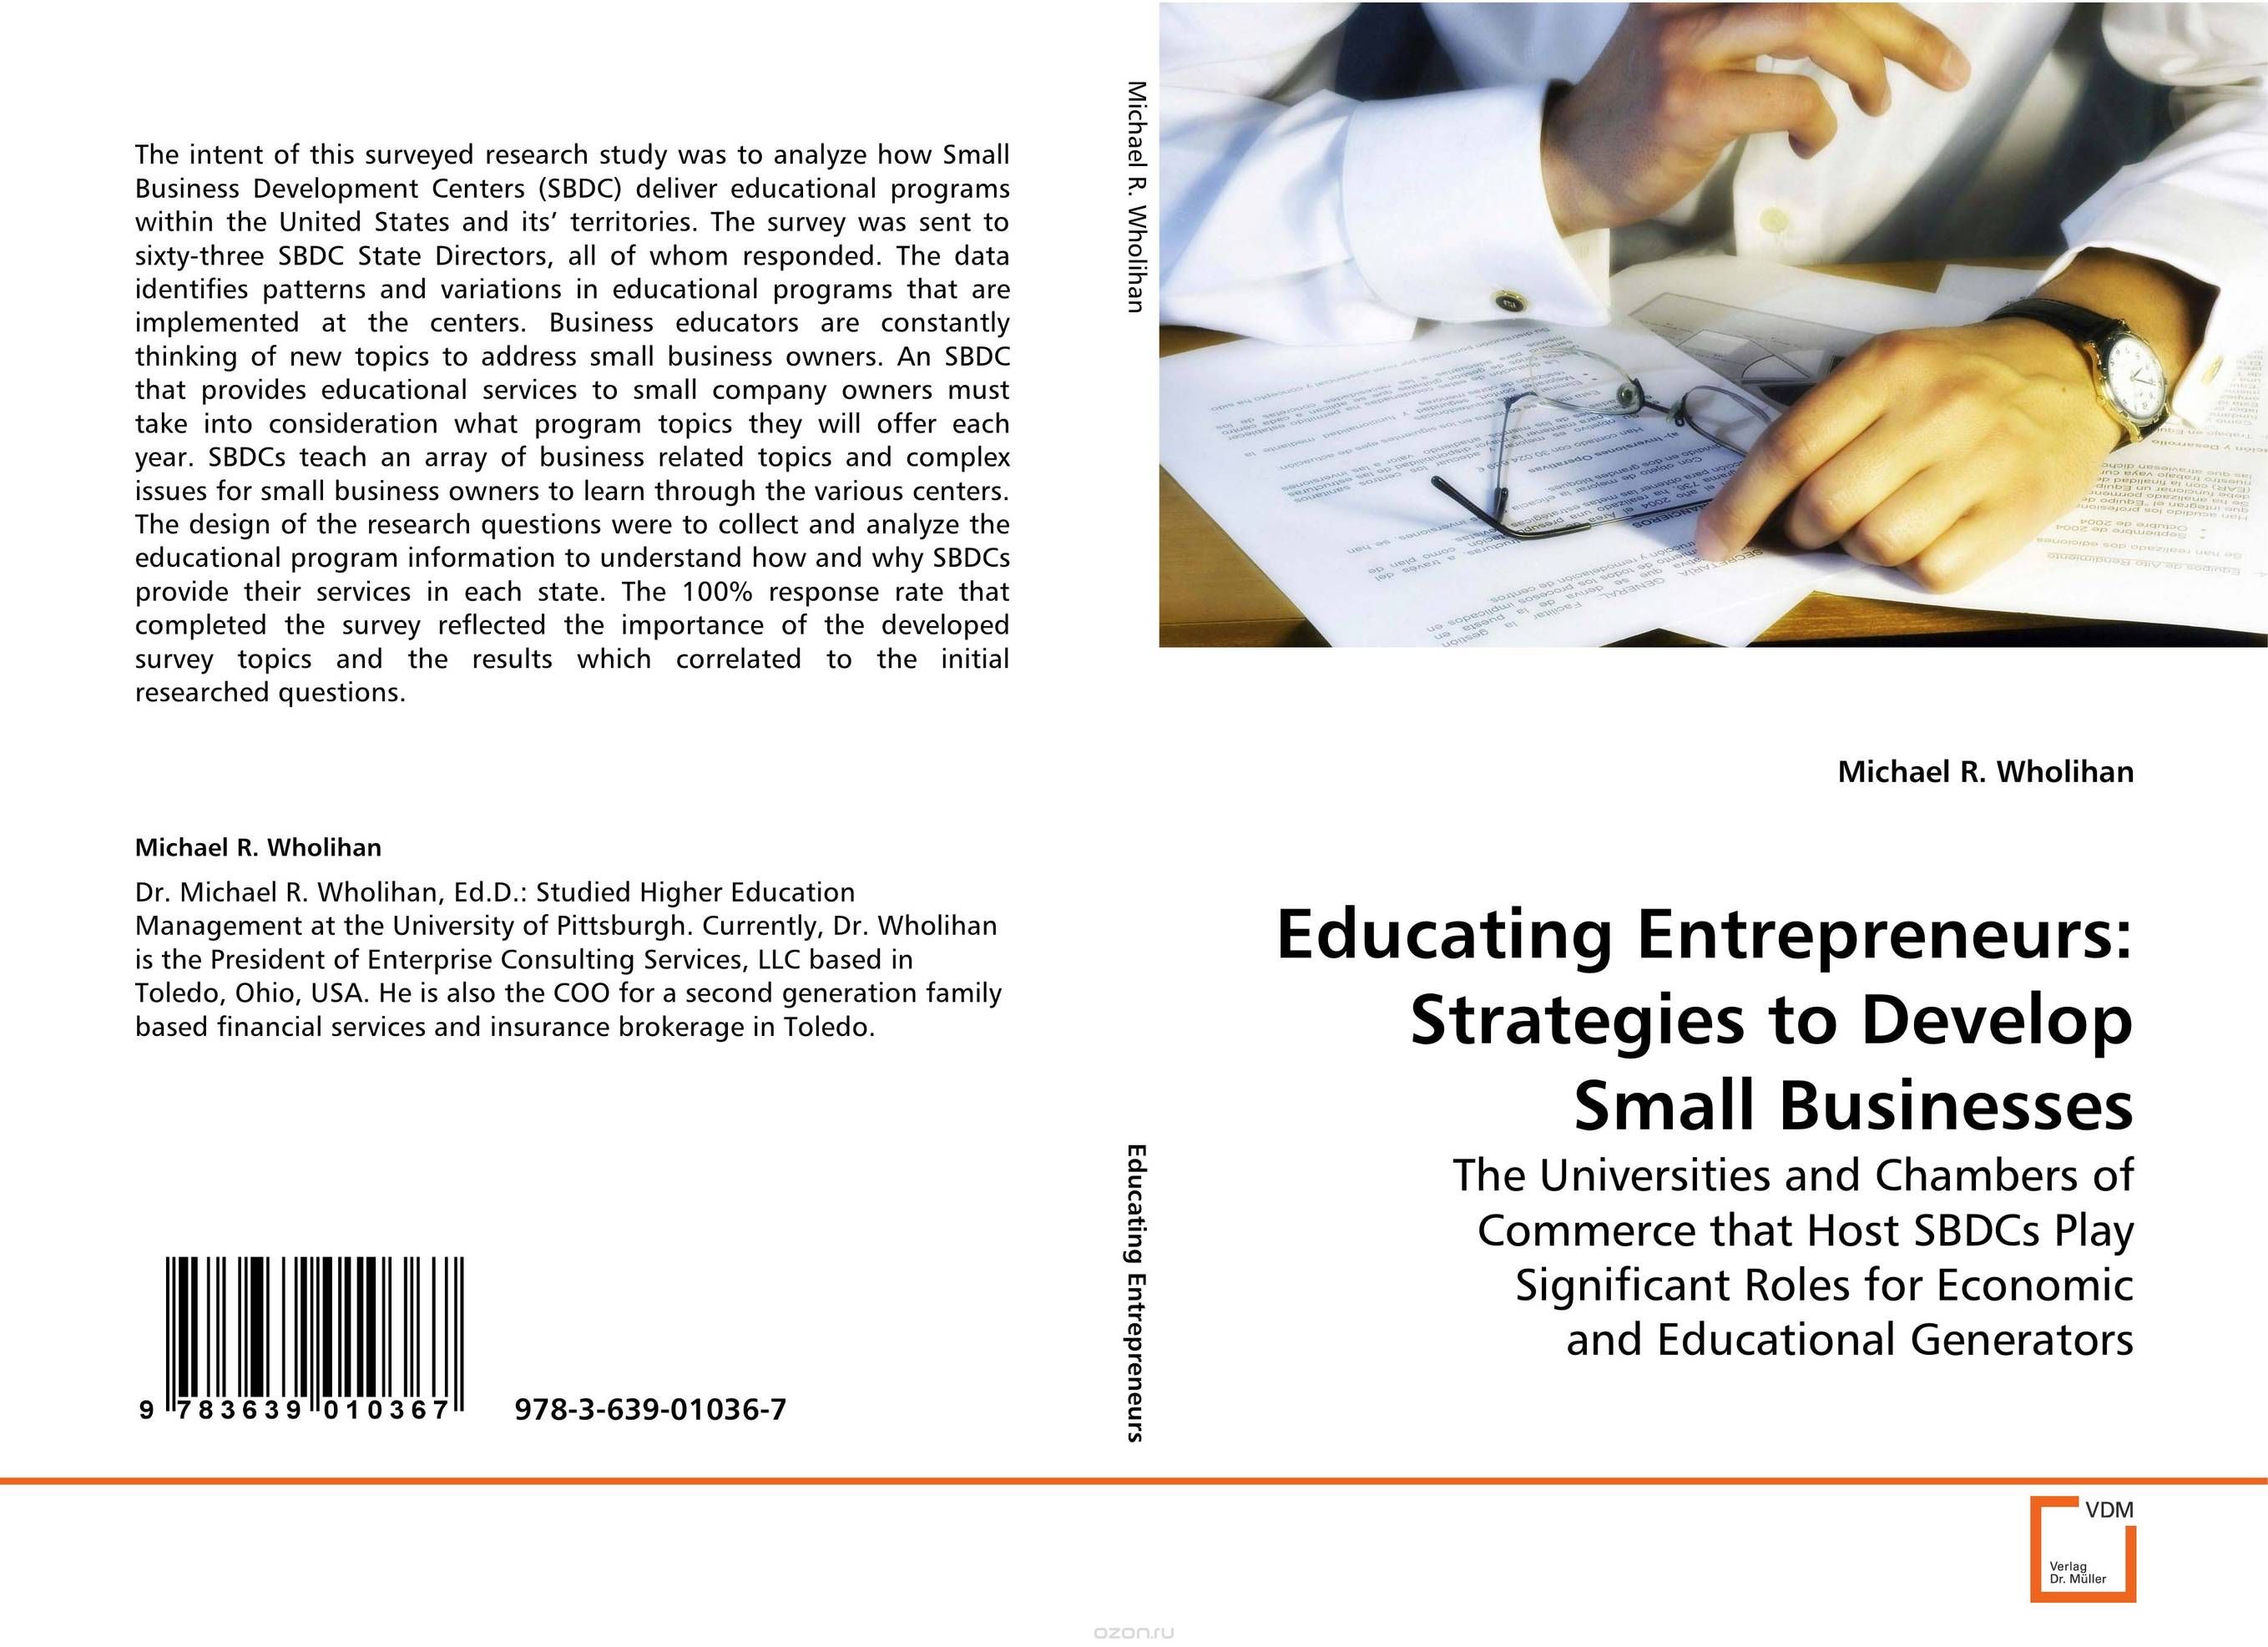 Скачать книгу "Educating Entrepreneurs: Strategies to Develop Small Businesses"